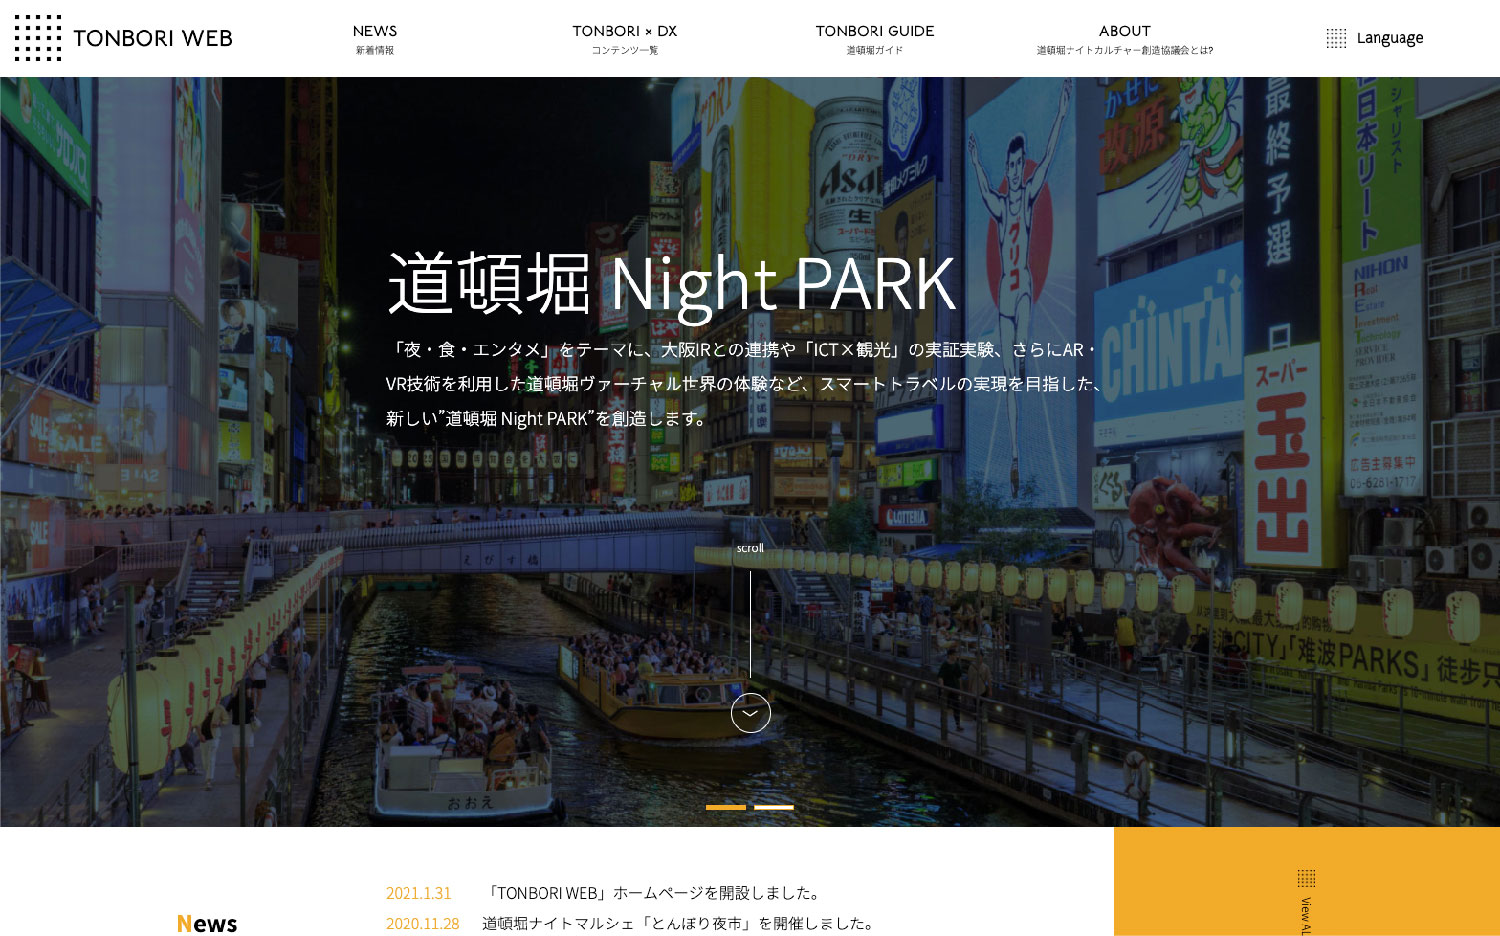 「TONBORI WEB」ホームページを開設しました。